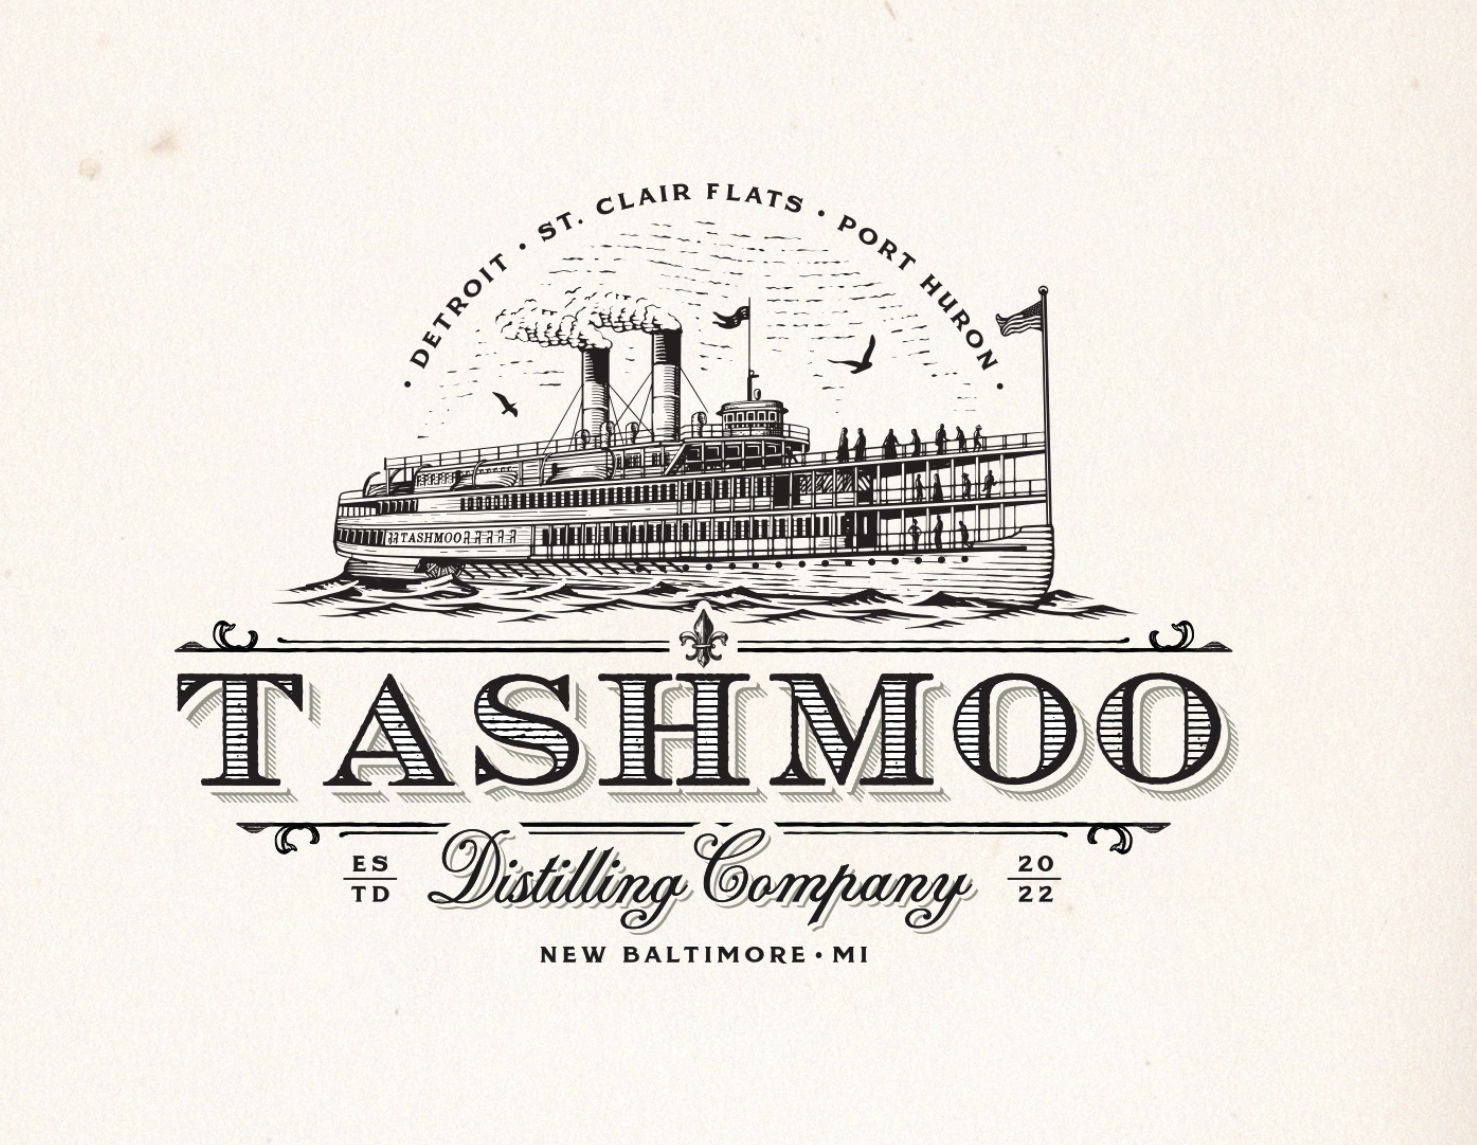 Tashmoo Distilling Company